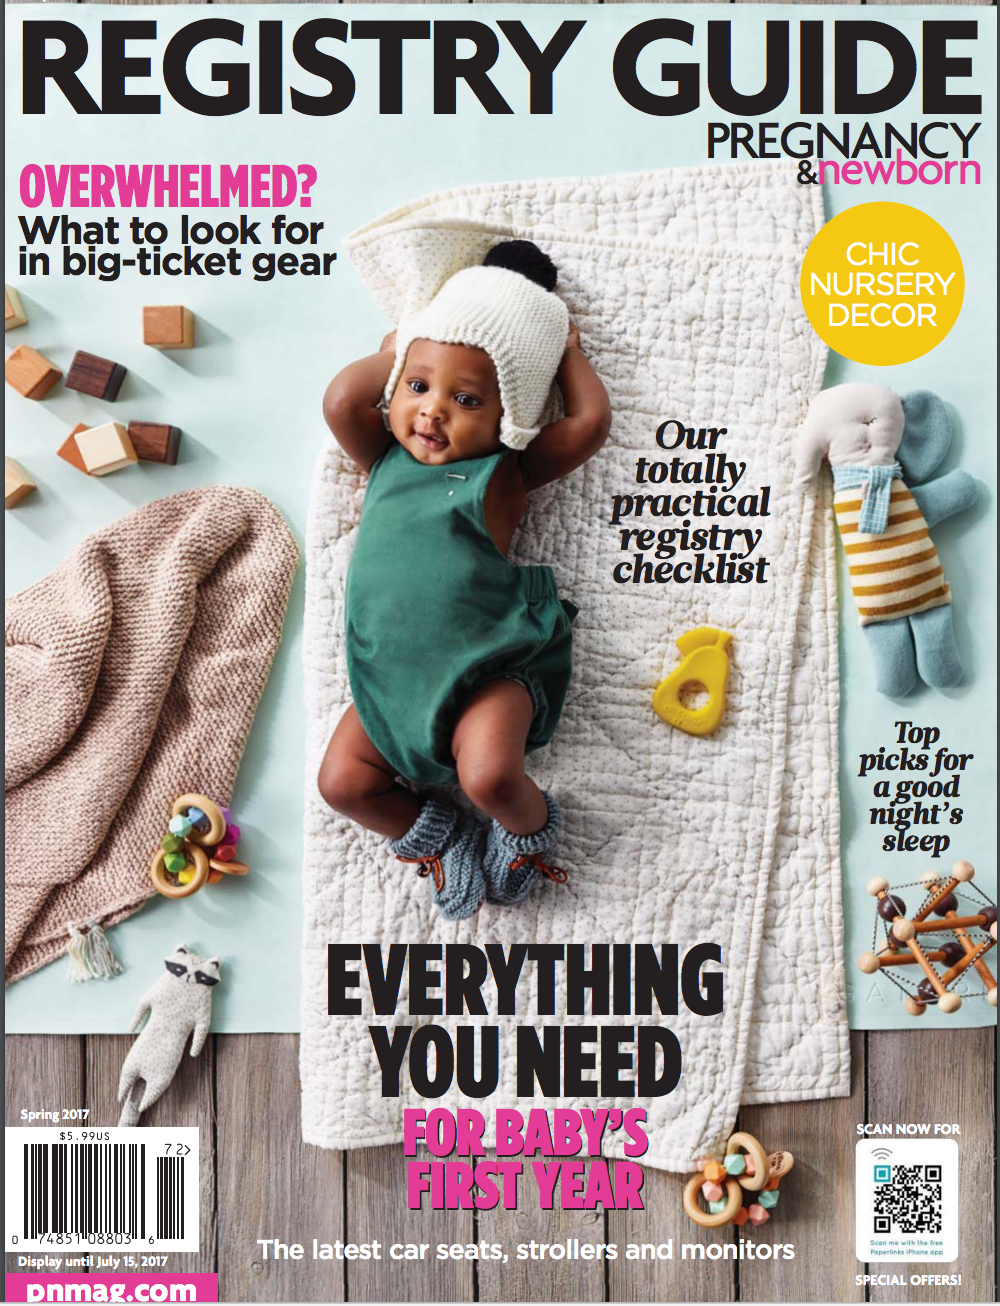 Cardimom® featured in Pregnancy & Newborn Magazine Registry Guide!